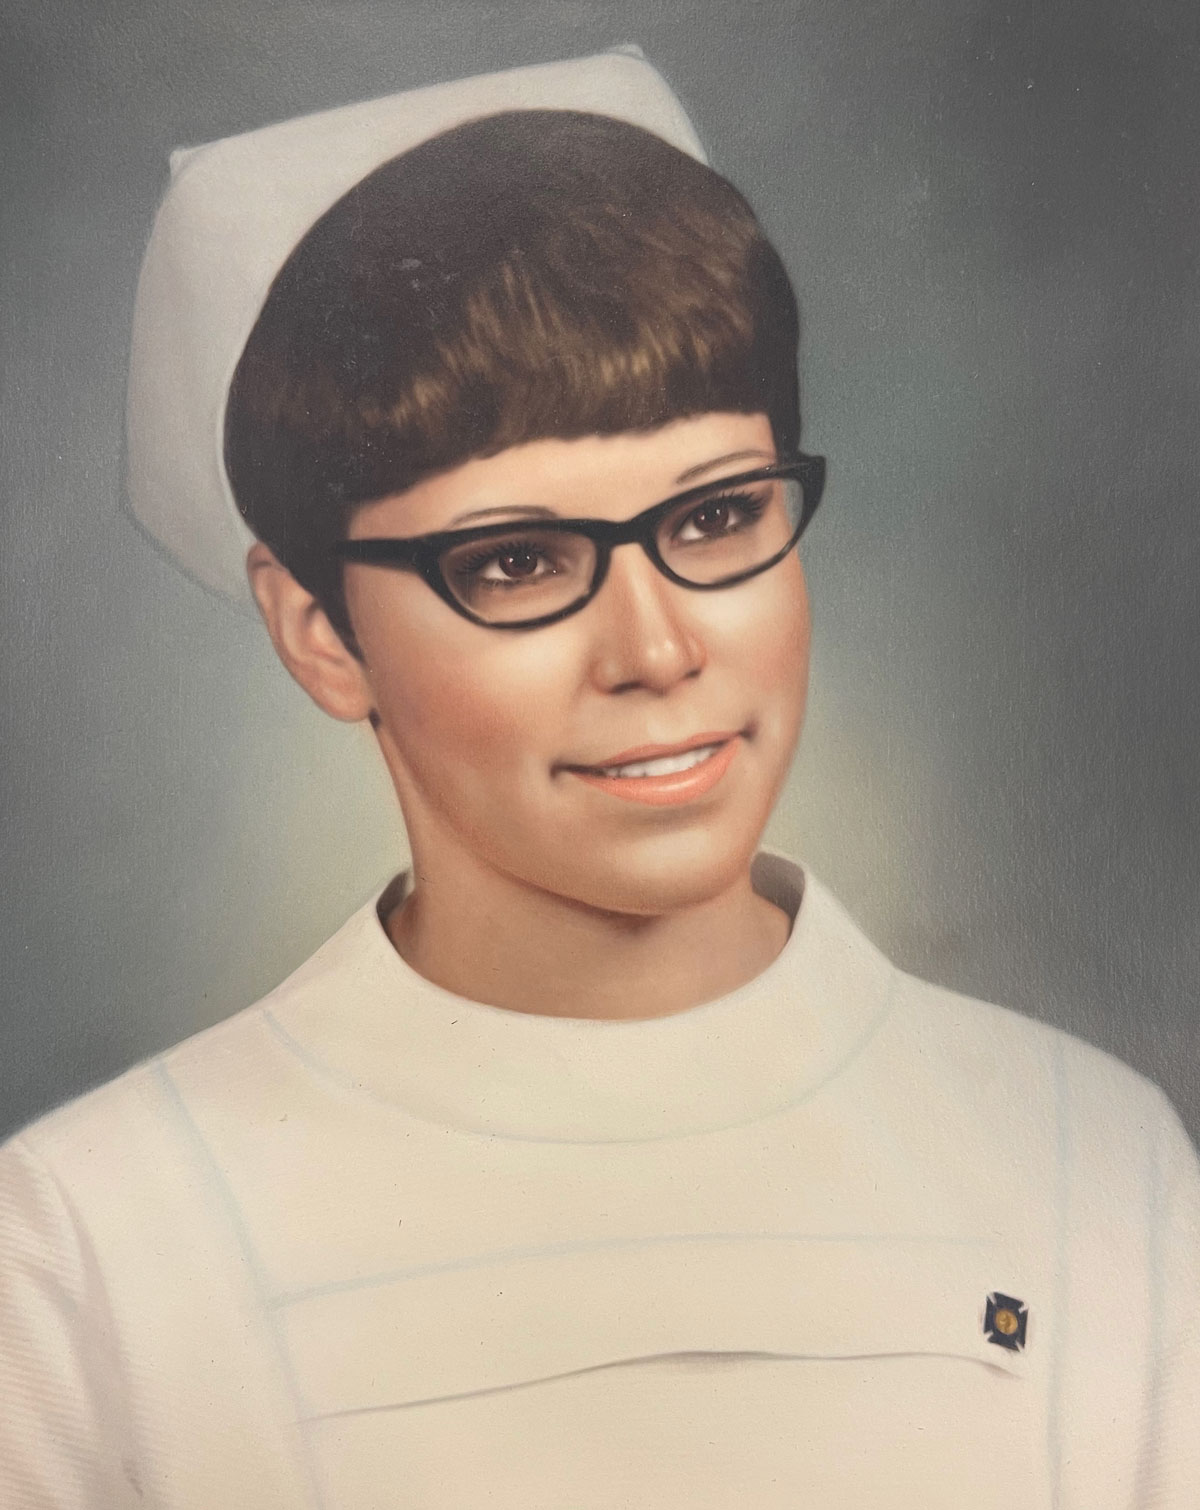 Nancy Ketterling in her nursing uniform upon her graduation from St. Lukes School of Nursing in Fargo. 